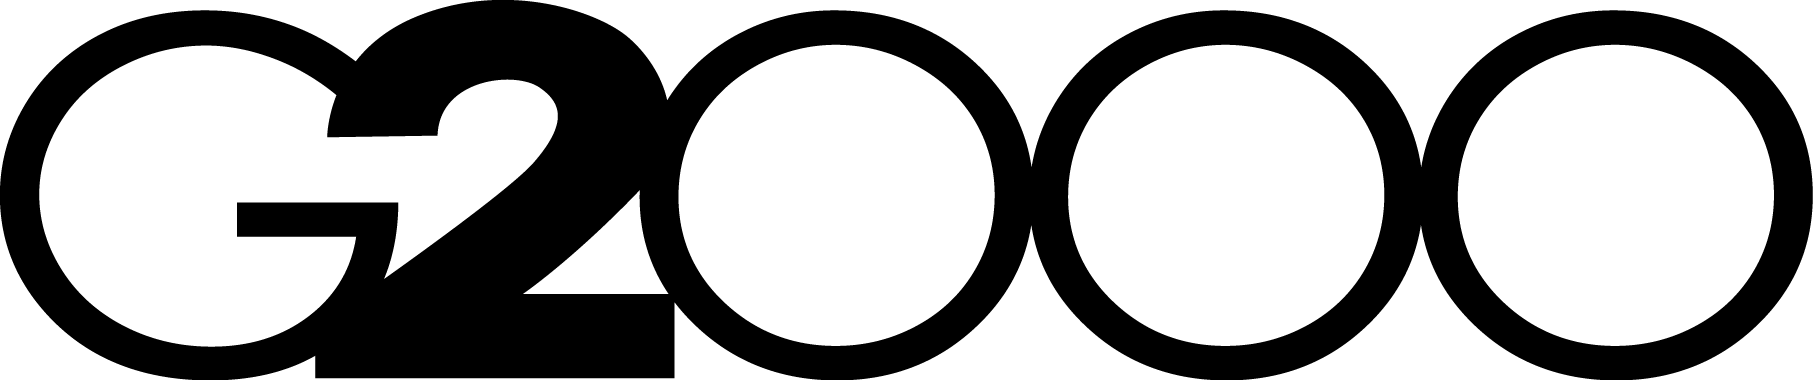 G2000 Logo BLACK.png